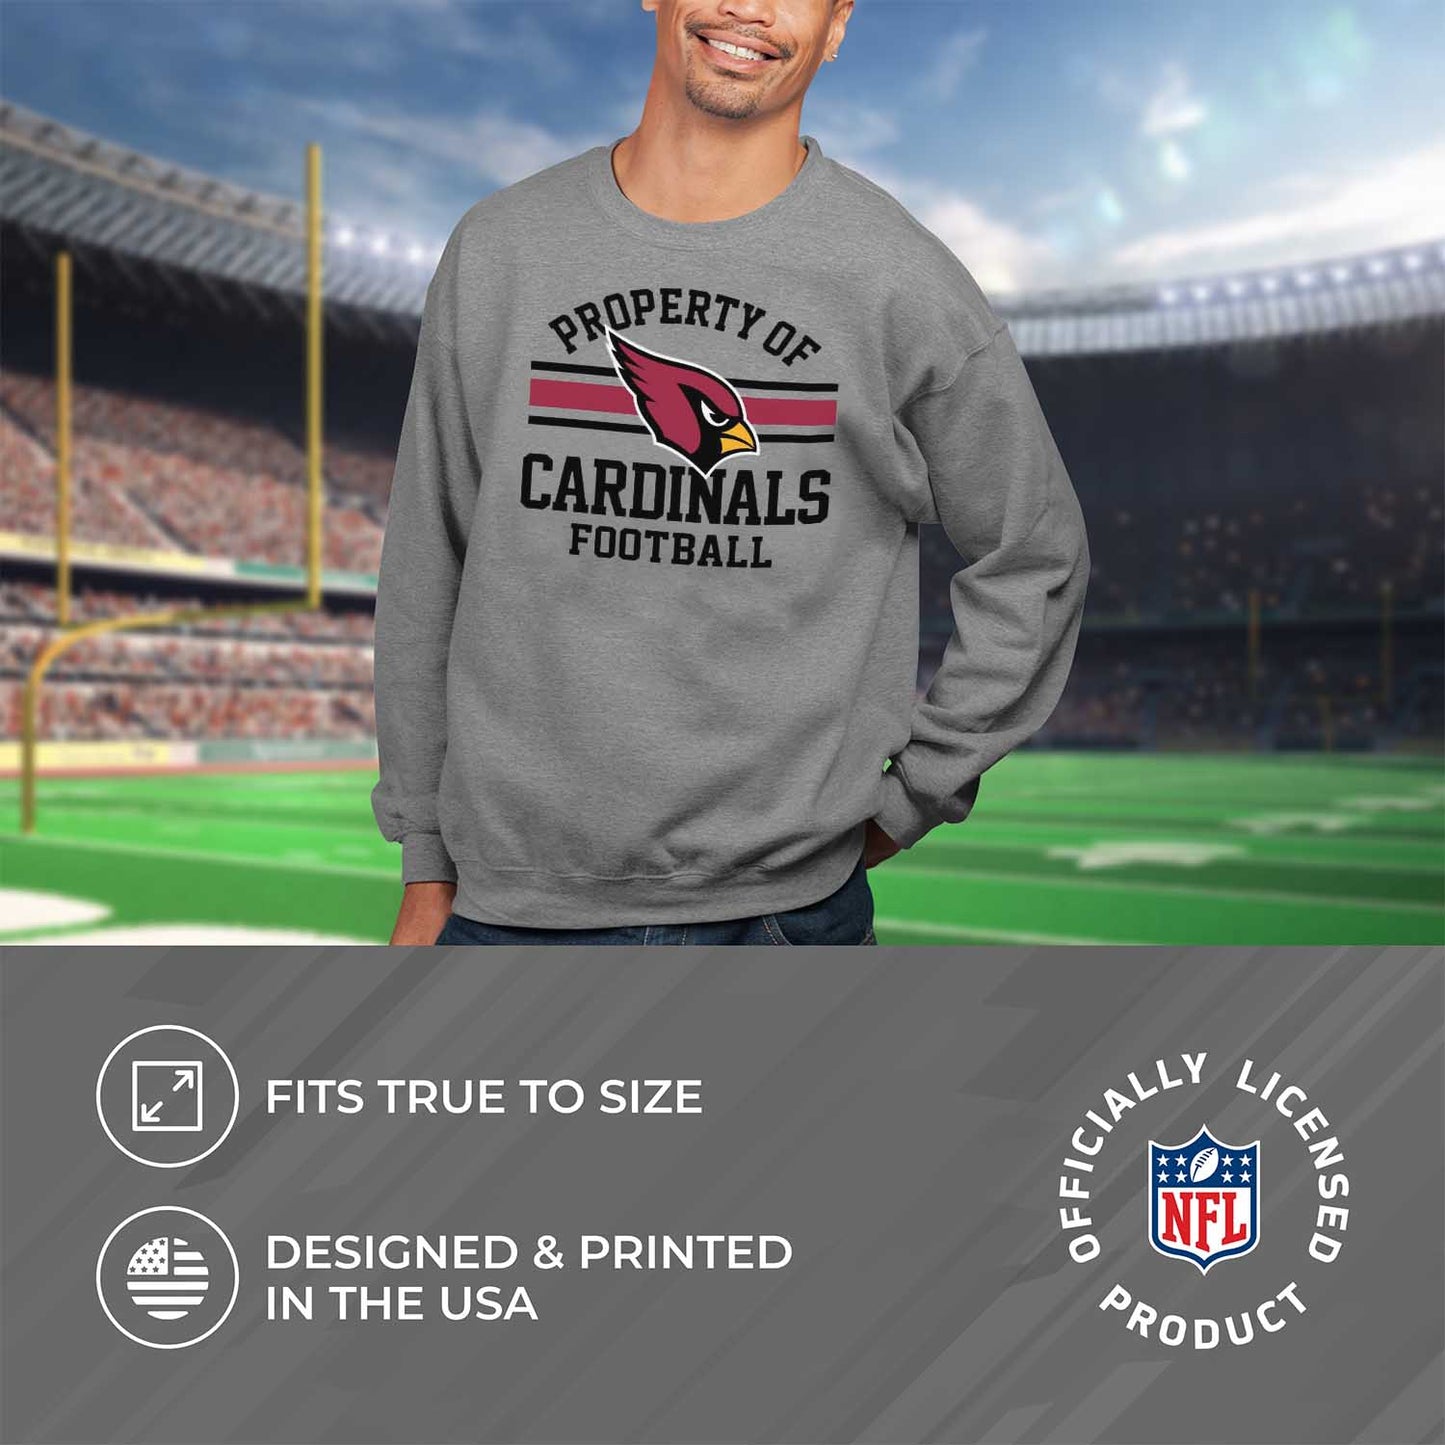 Arizona Cardinals NFL Adult Property Of Crewneck Fleece Sweatshirt - Sport Gray